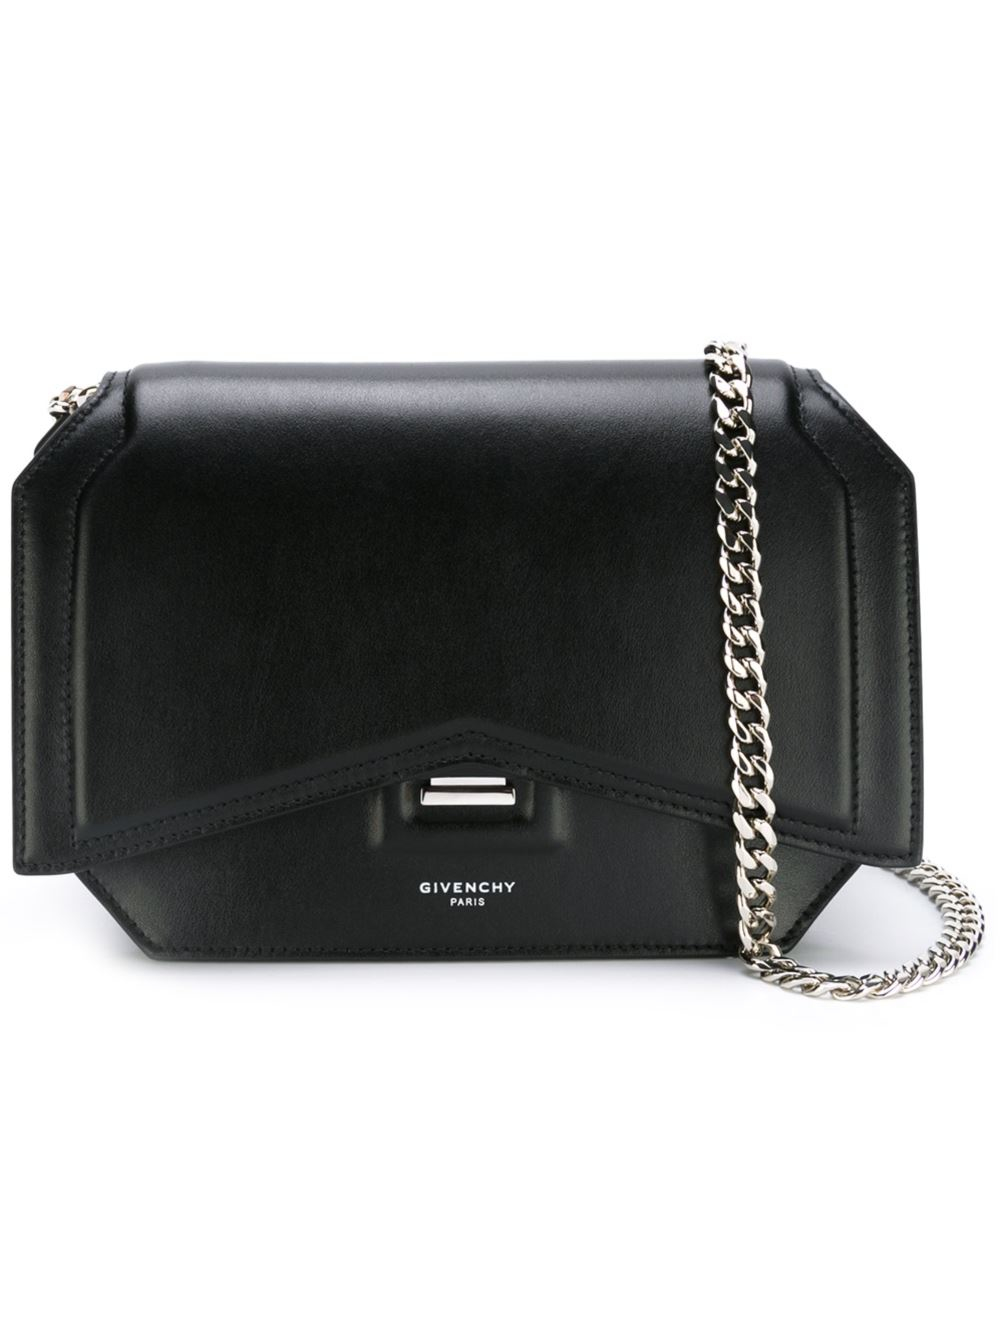 Givenchy Mini 'bow-cut' Crossbody Bag in Multicolor | Lyst